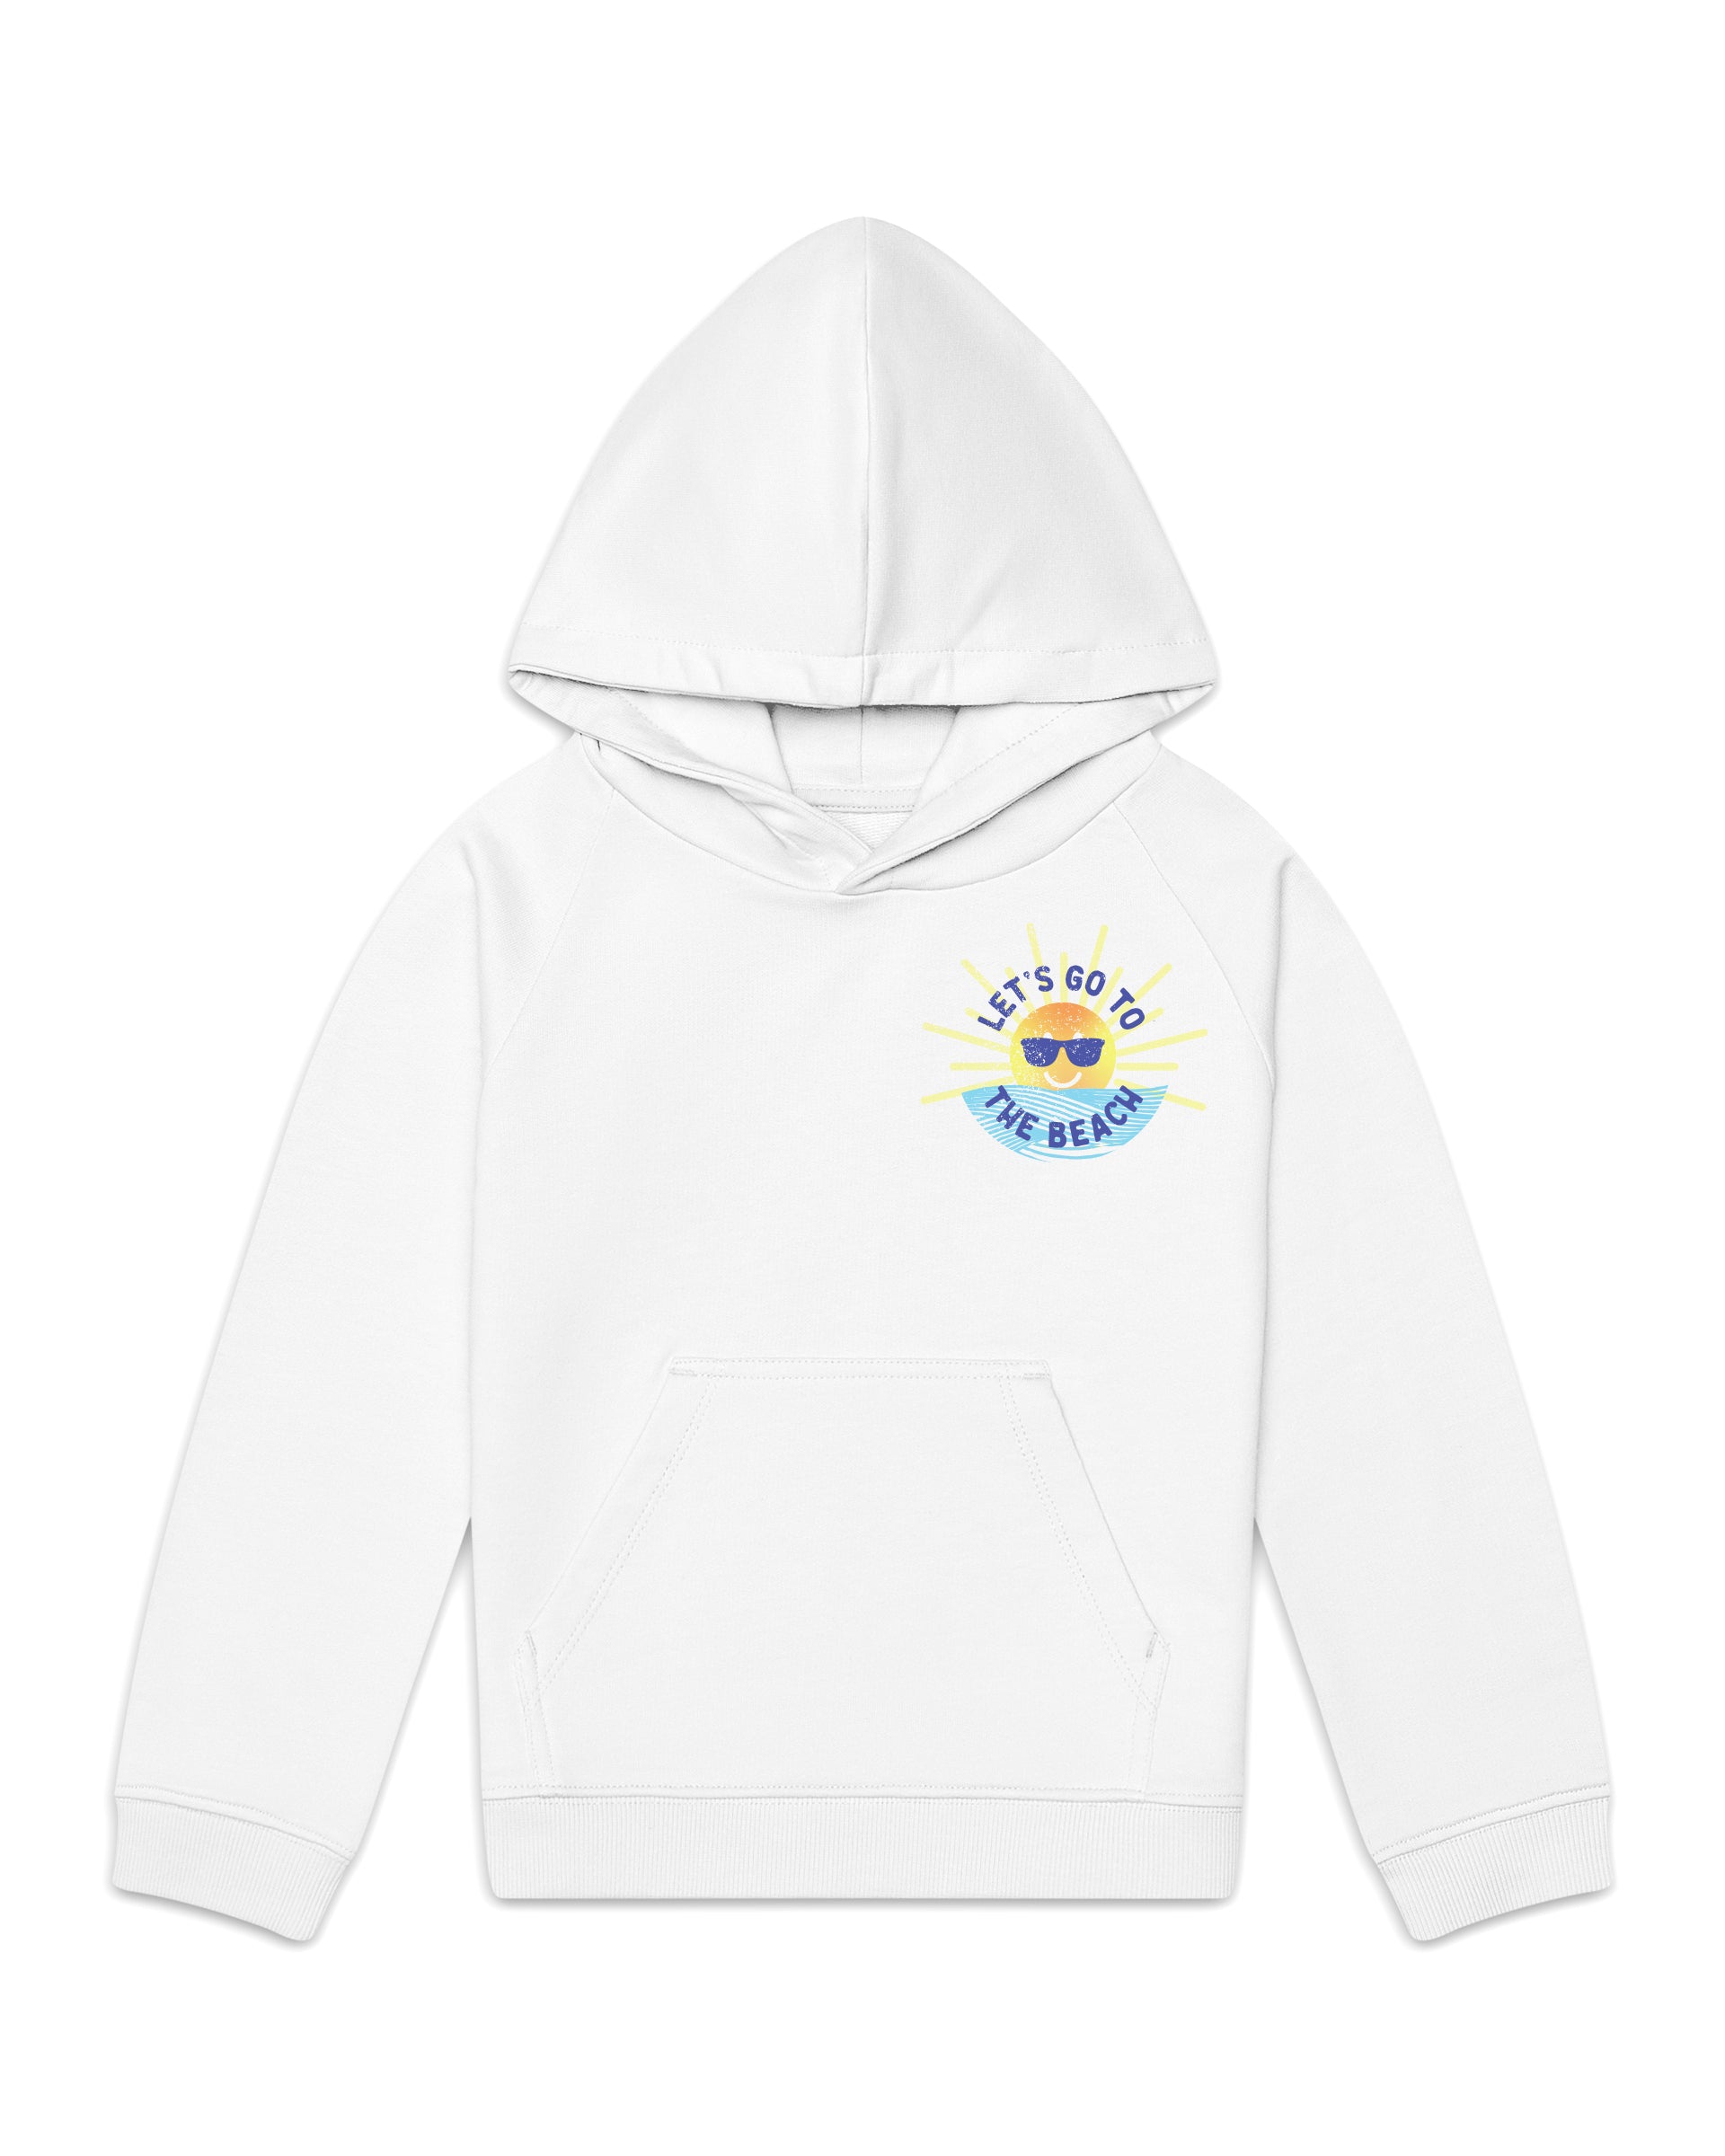 The Organic Hoodie Sweatshirt [Let's Go to the Beach]